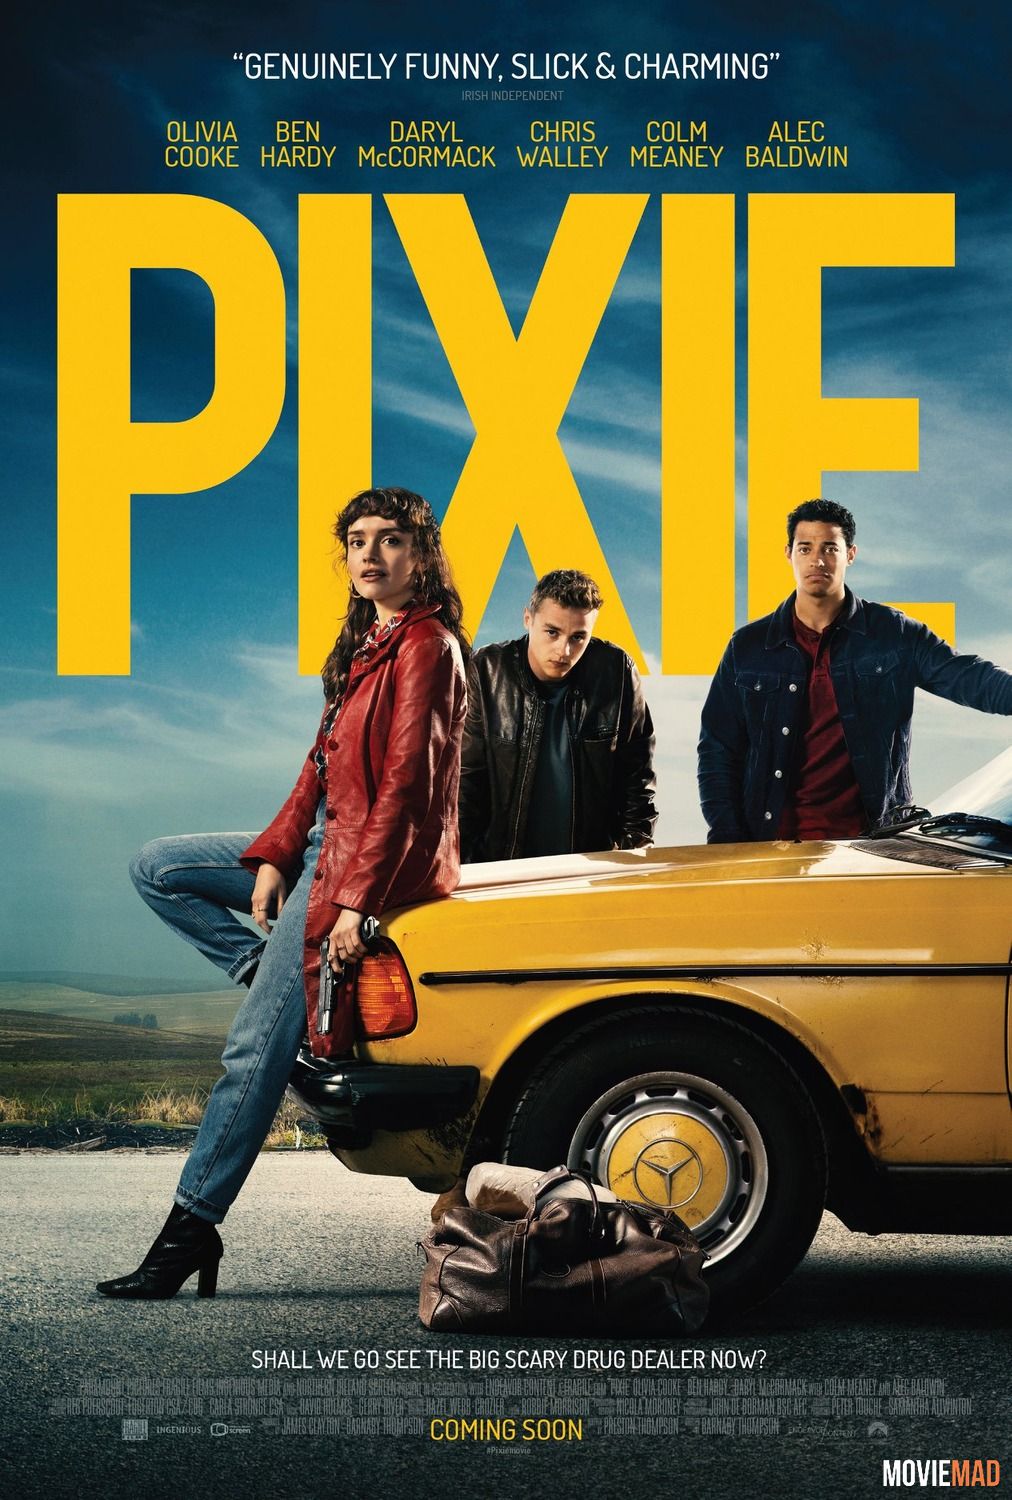 Pixie 2020 English WEB DL Full Movie 720p 480p